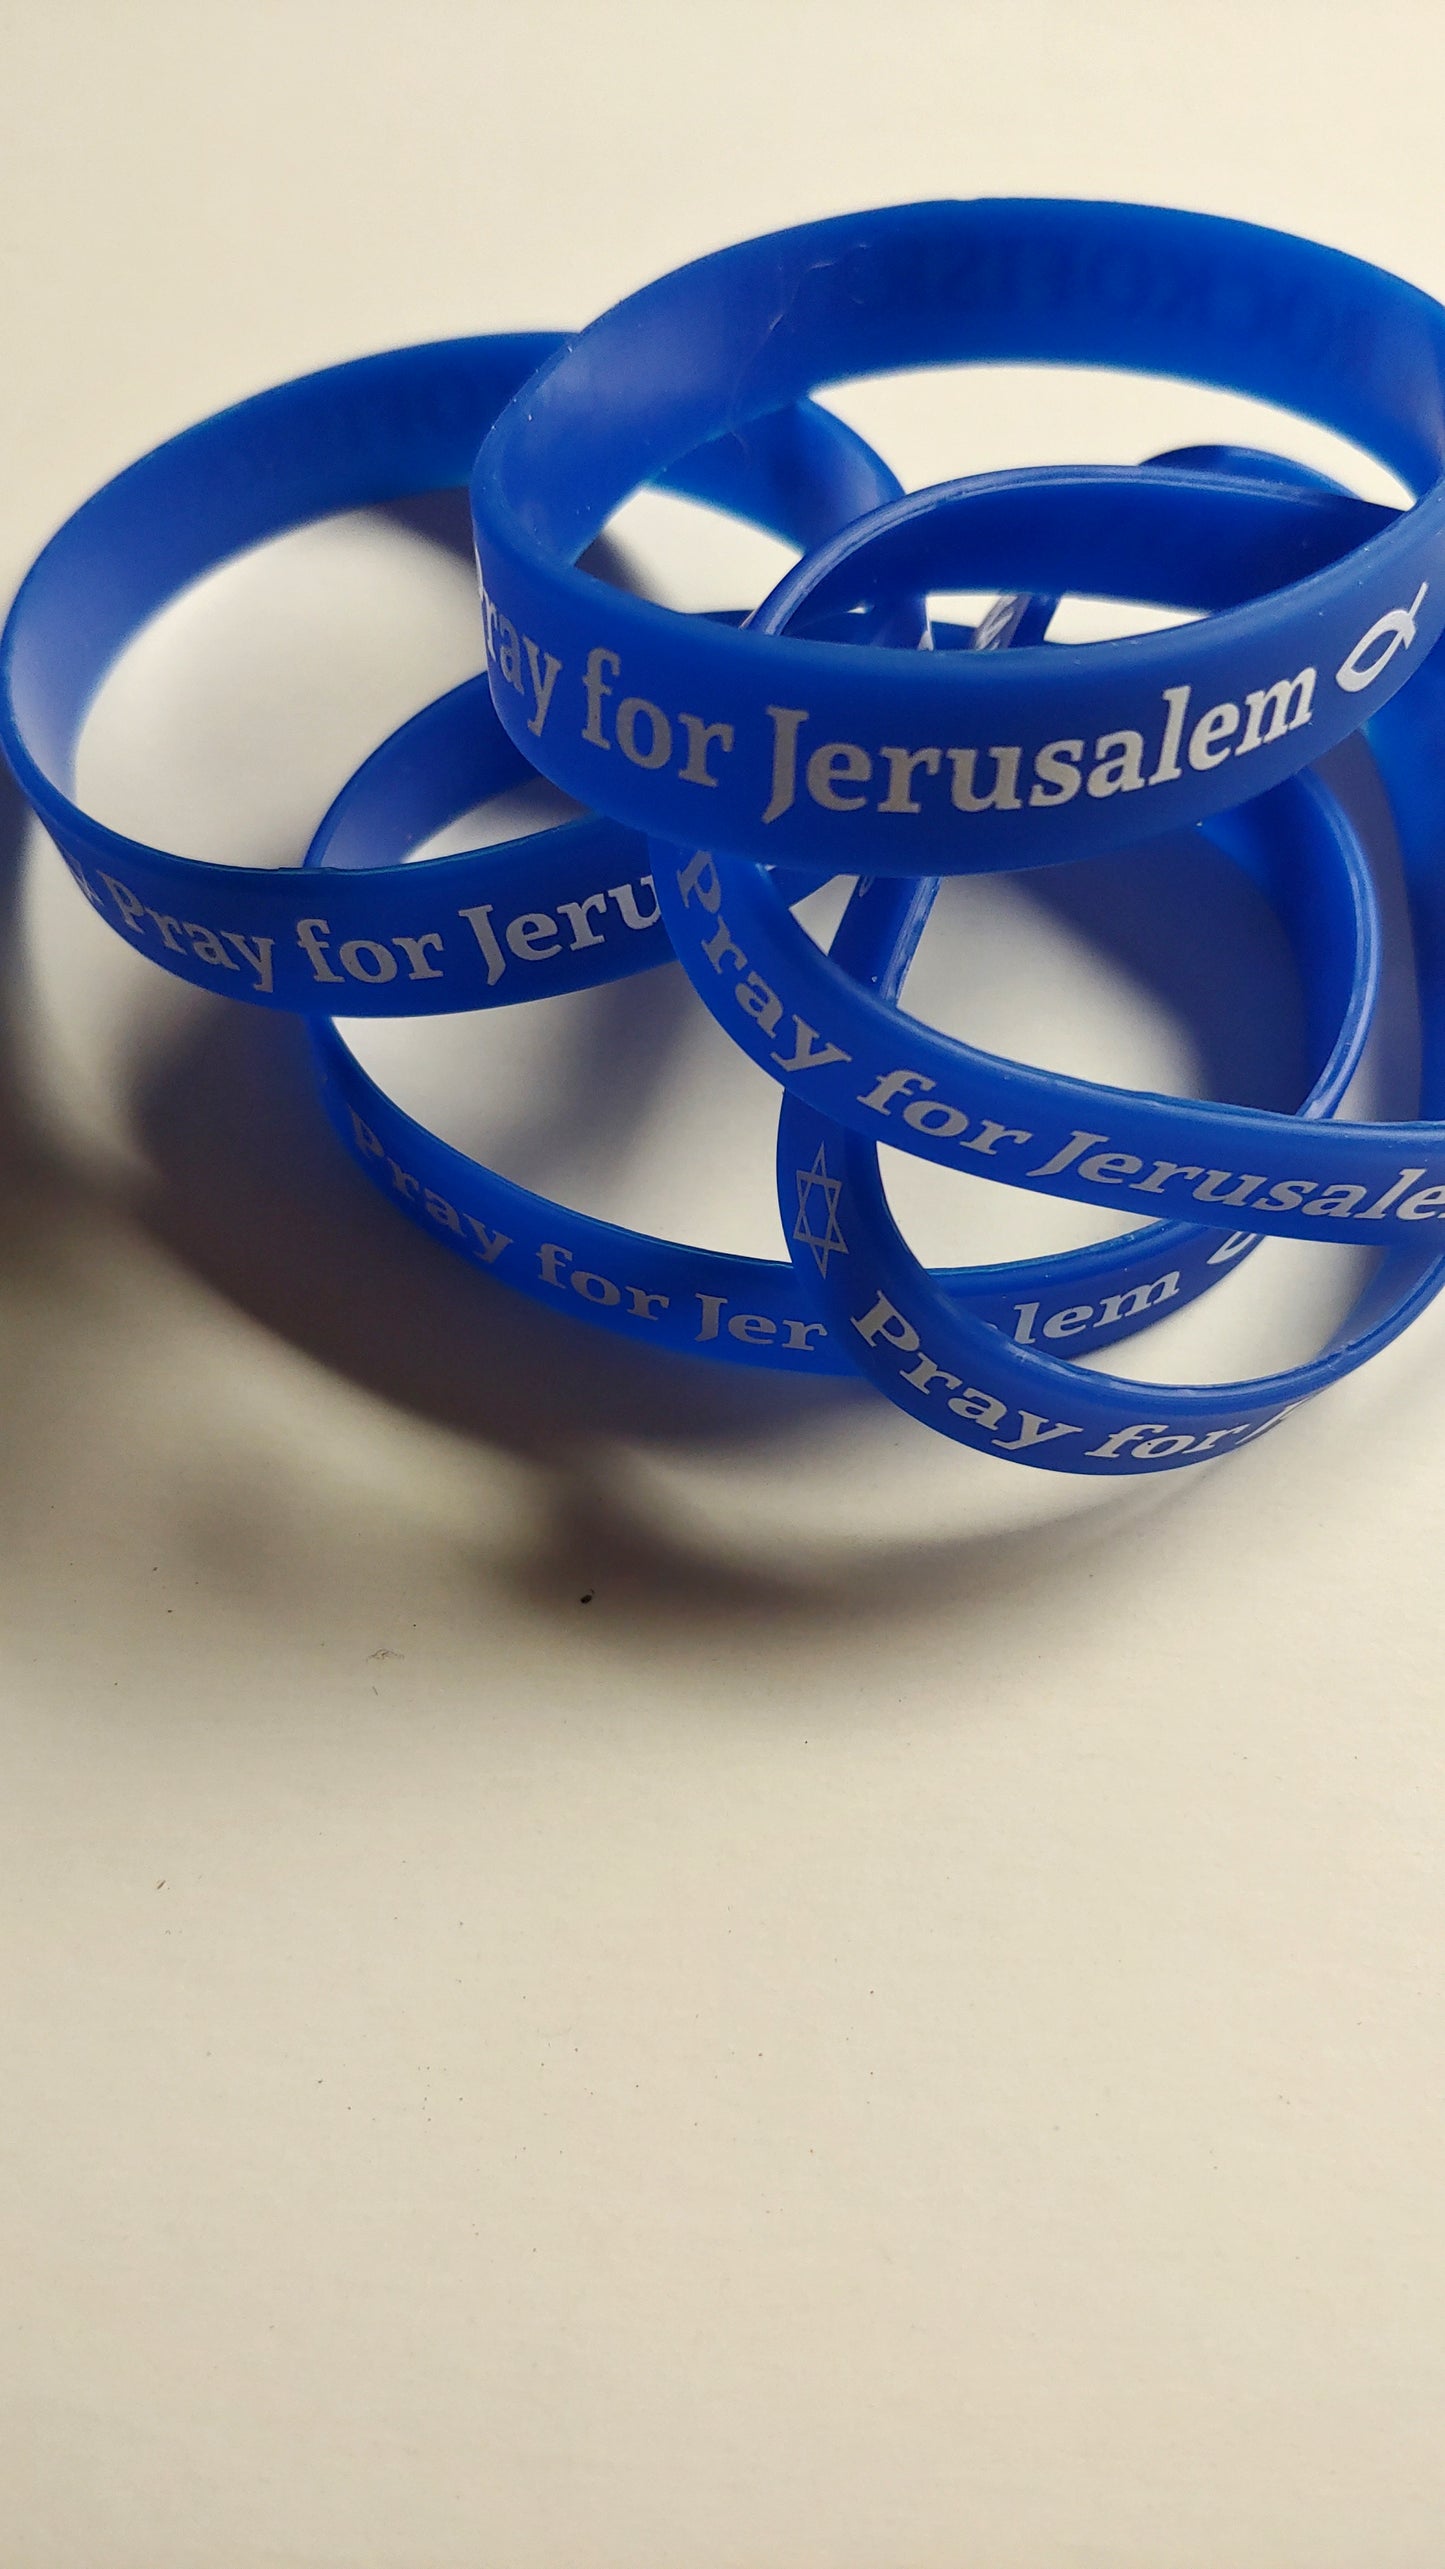 Pray for Jerusalem / Pray for Israel rubber wristband